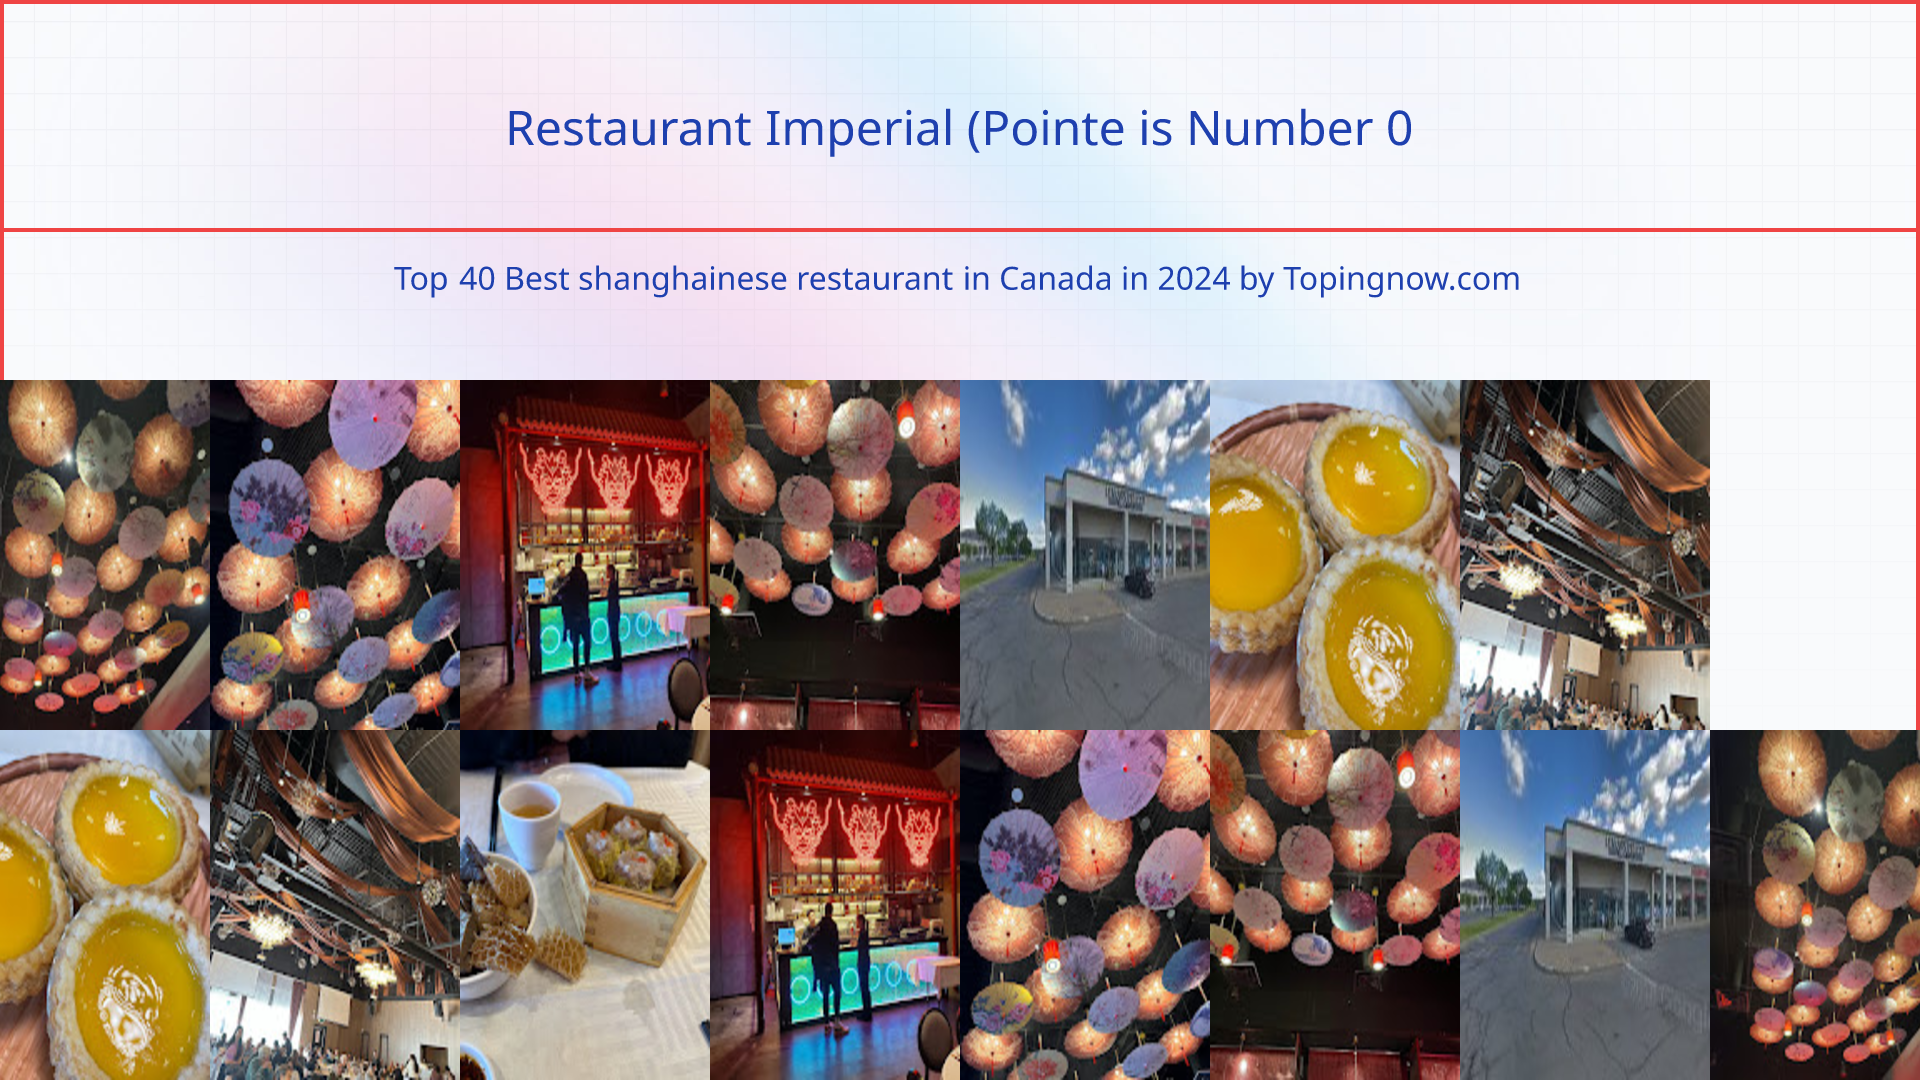 Restaurant Imperial (Pointe: Top 40 Best shanghainese restaurant in Canada in 2024